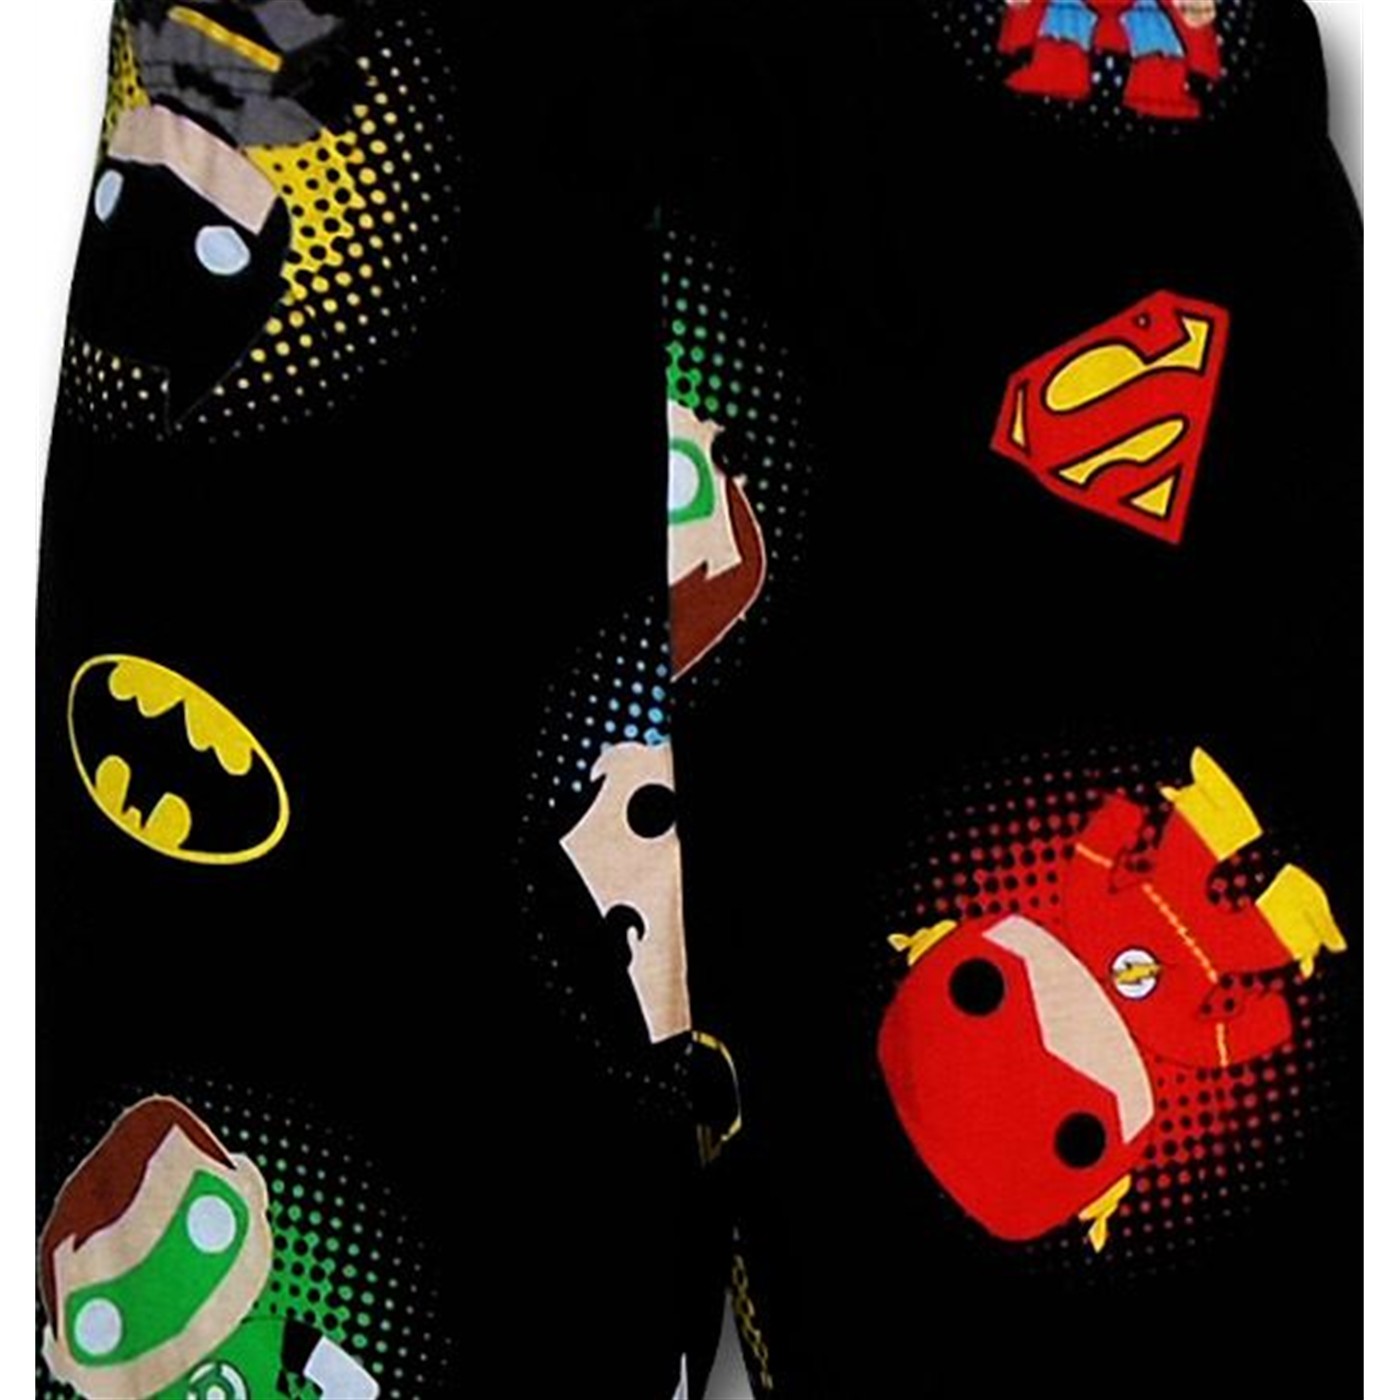 Justice League Funko Sleep Pants